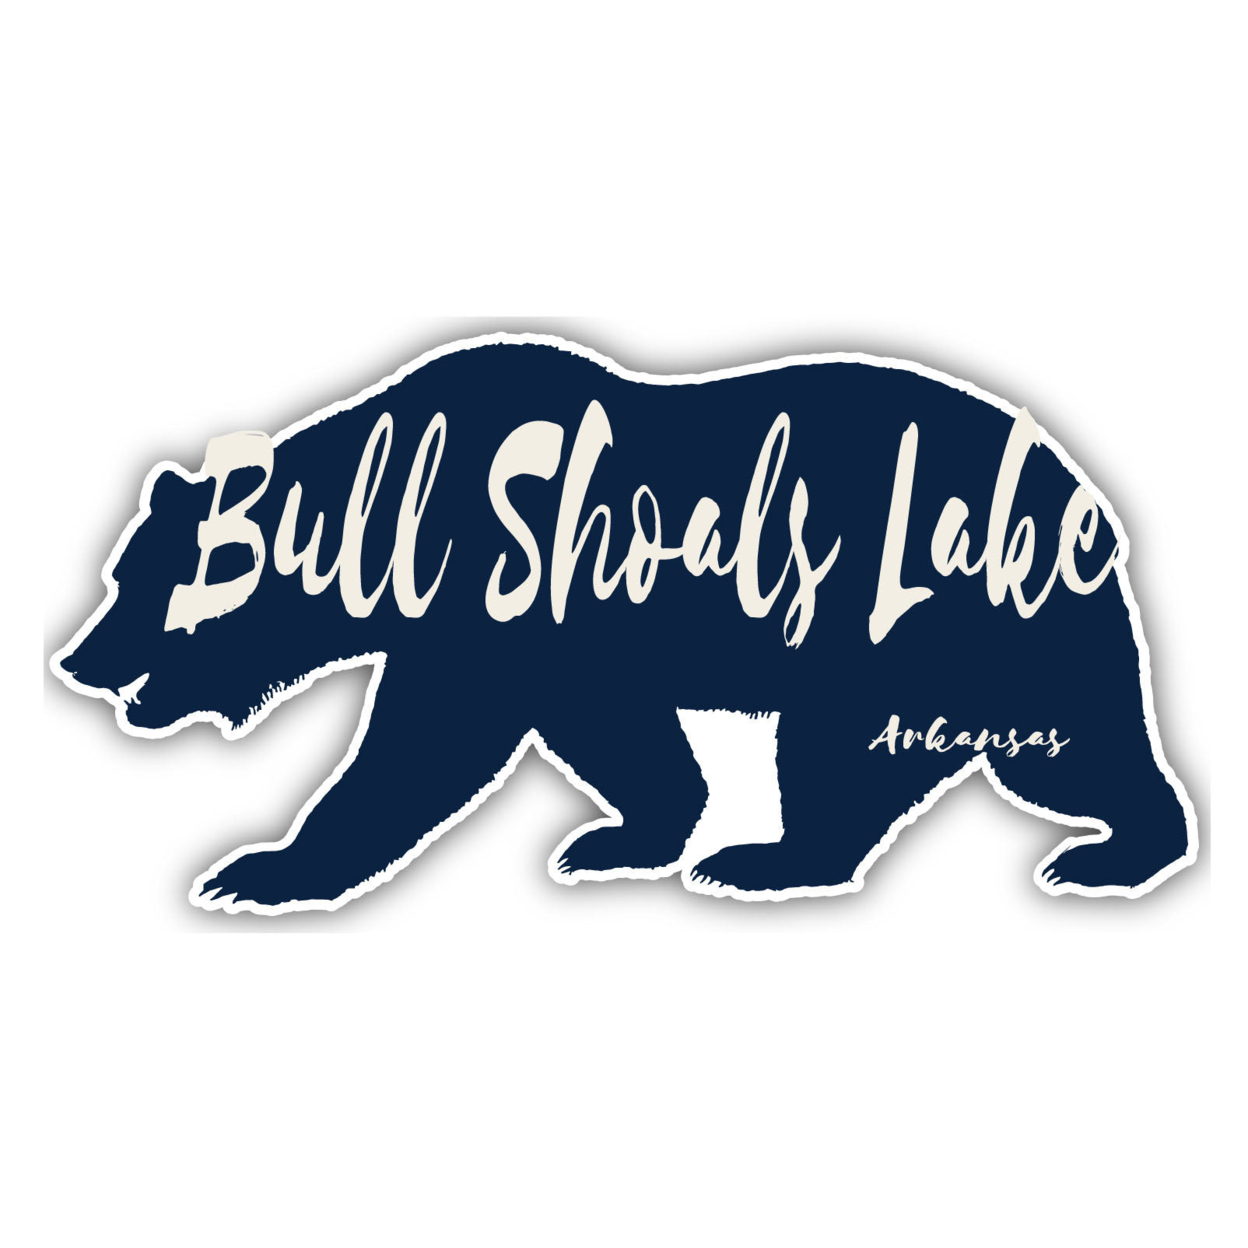 Bull Shoals Lake Arkansas Souvenir Decorative Stickers (Choose Theme And Size) - 4-Pack, 4-Inch, Adventures Awaits